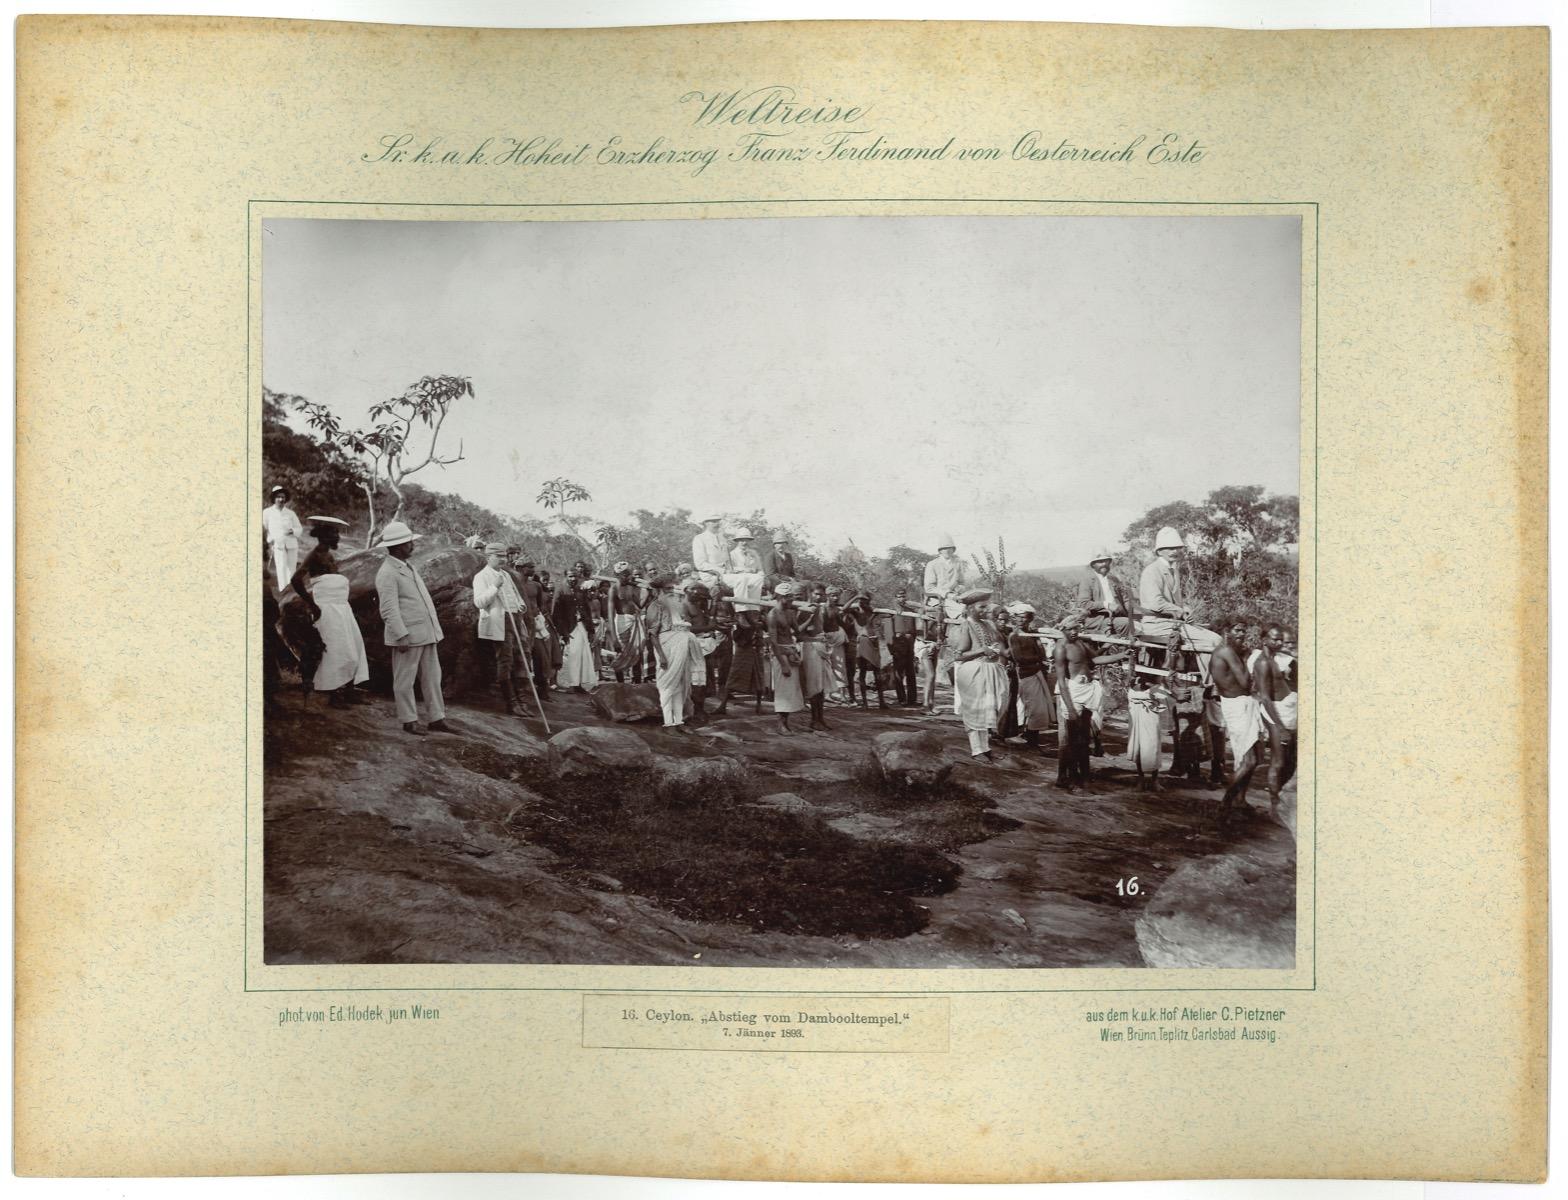 Unknown Landscape Photograph - Ceylon - Descent from Dambool Temple -Vintage Photo - 1893